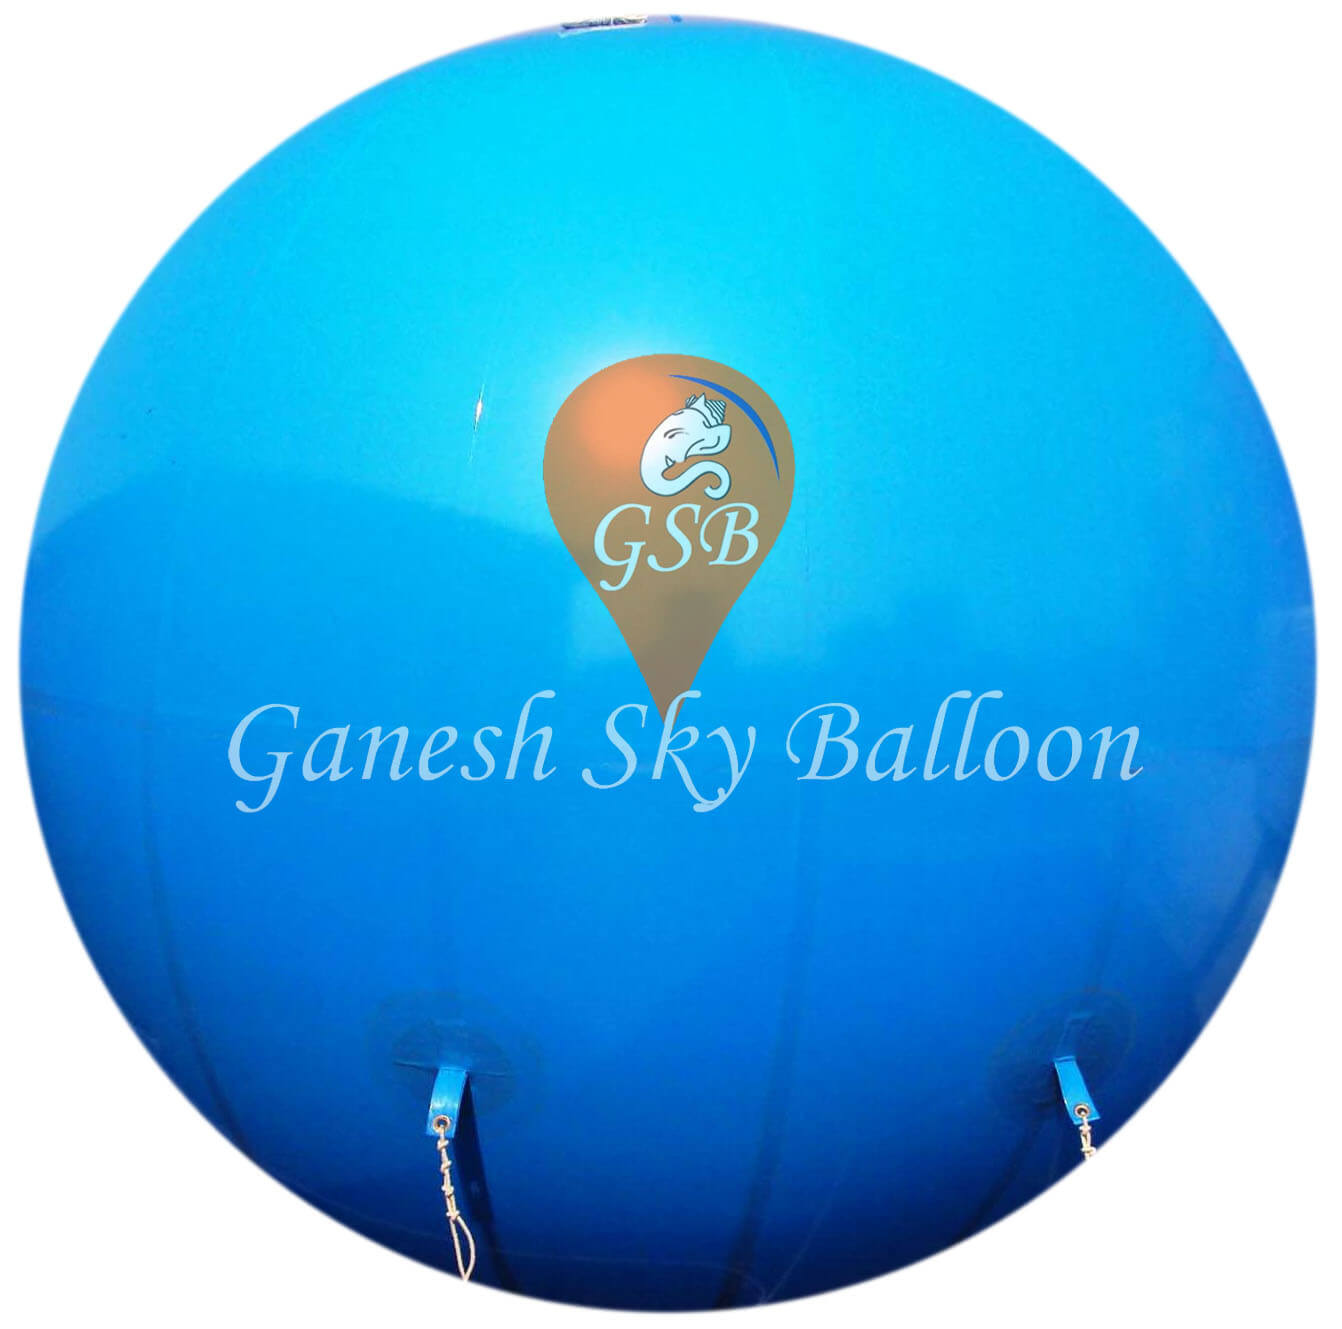 News Times India Advertising Sky Balloon